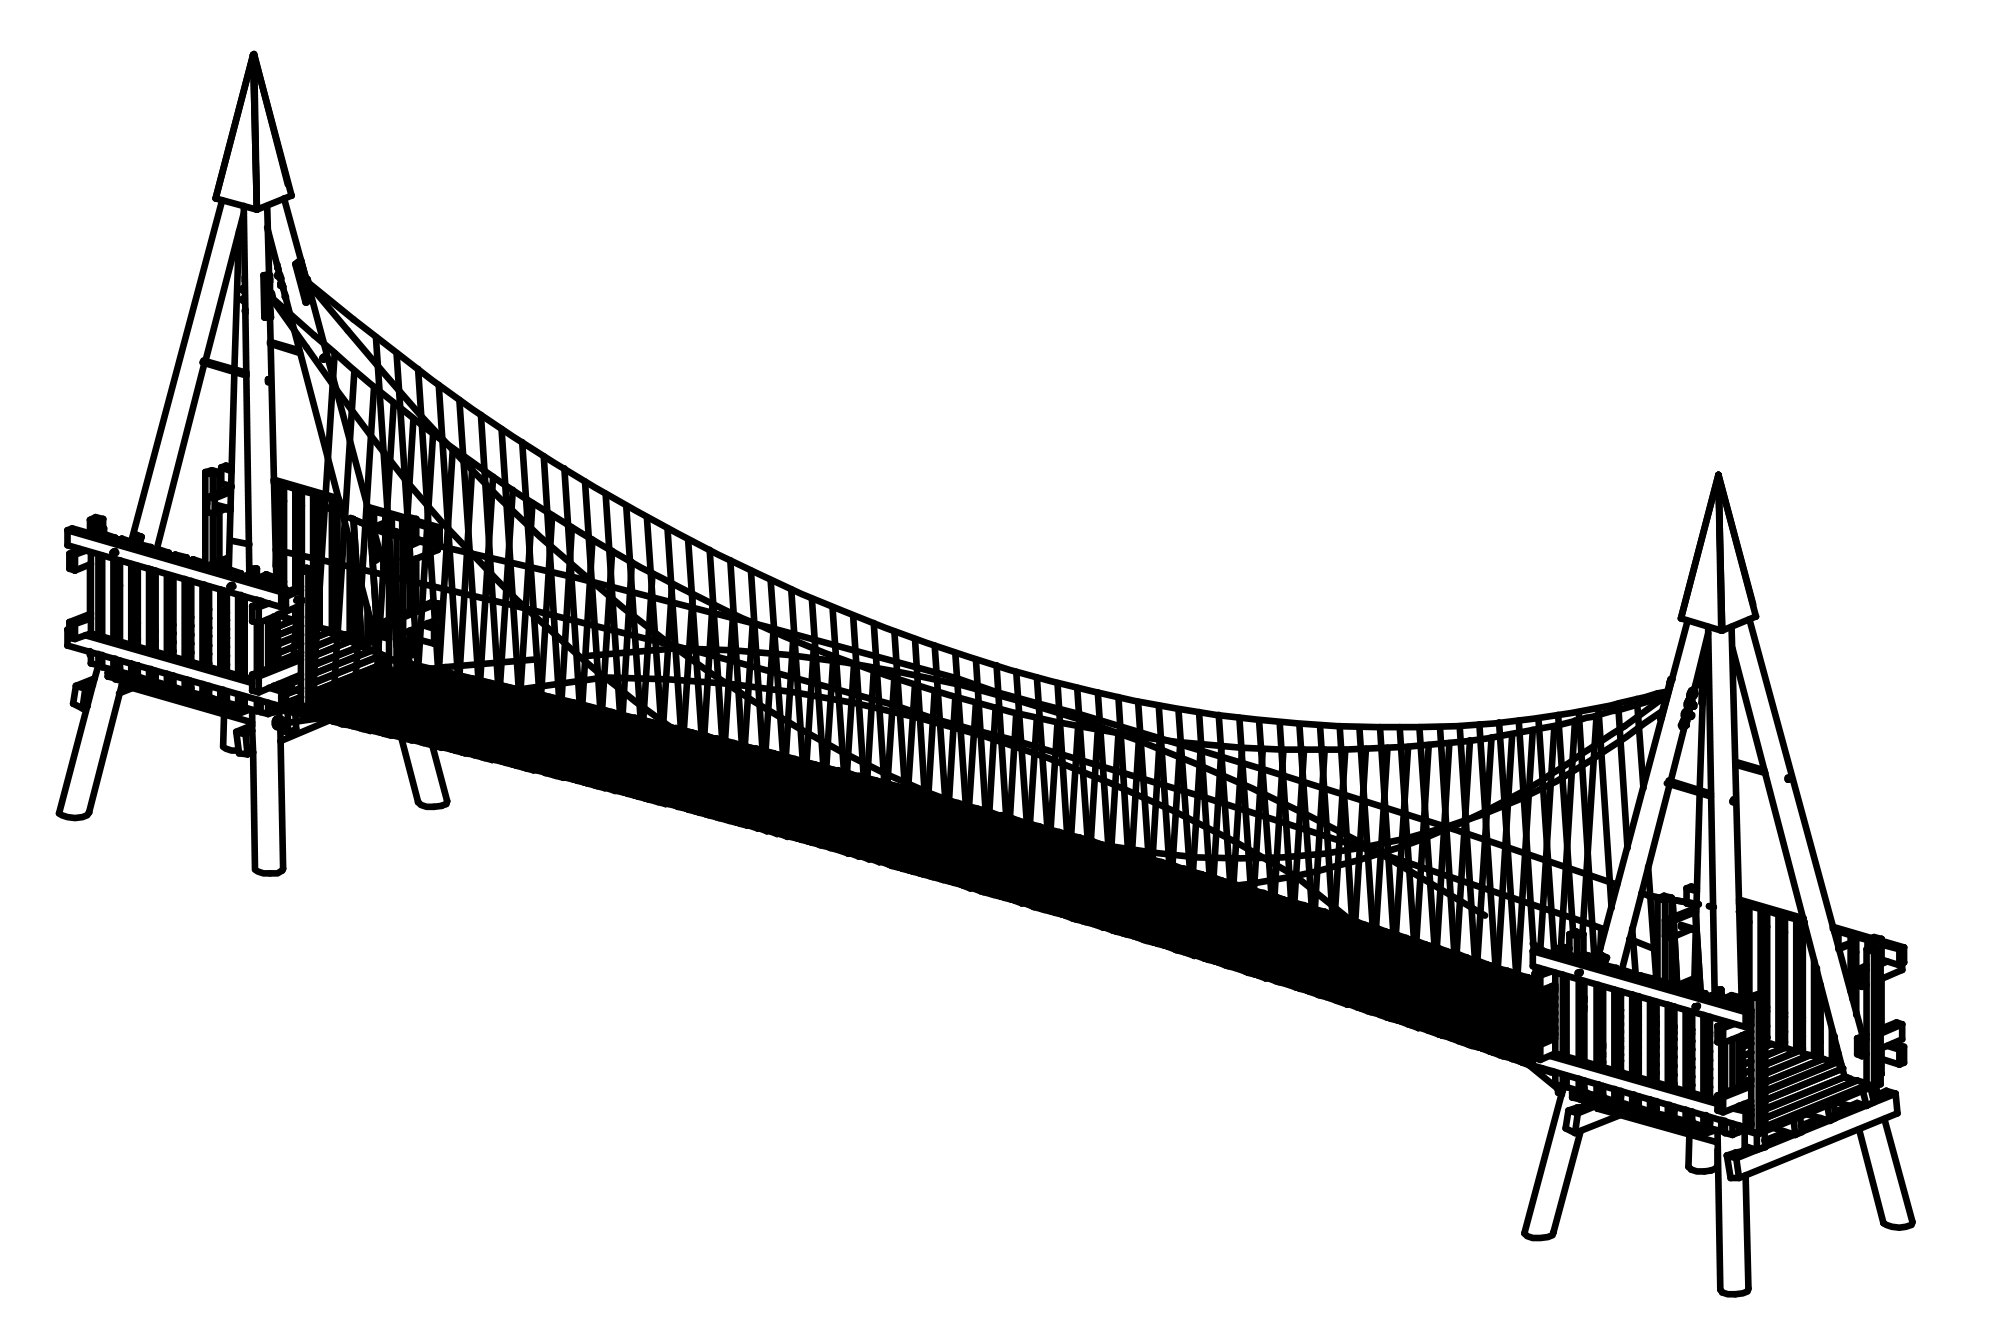 Suspension Bridge for Wheelchair Users